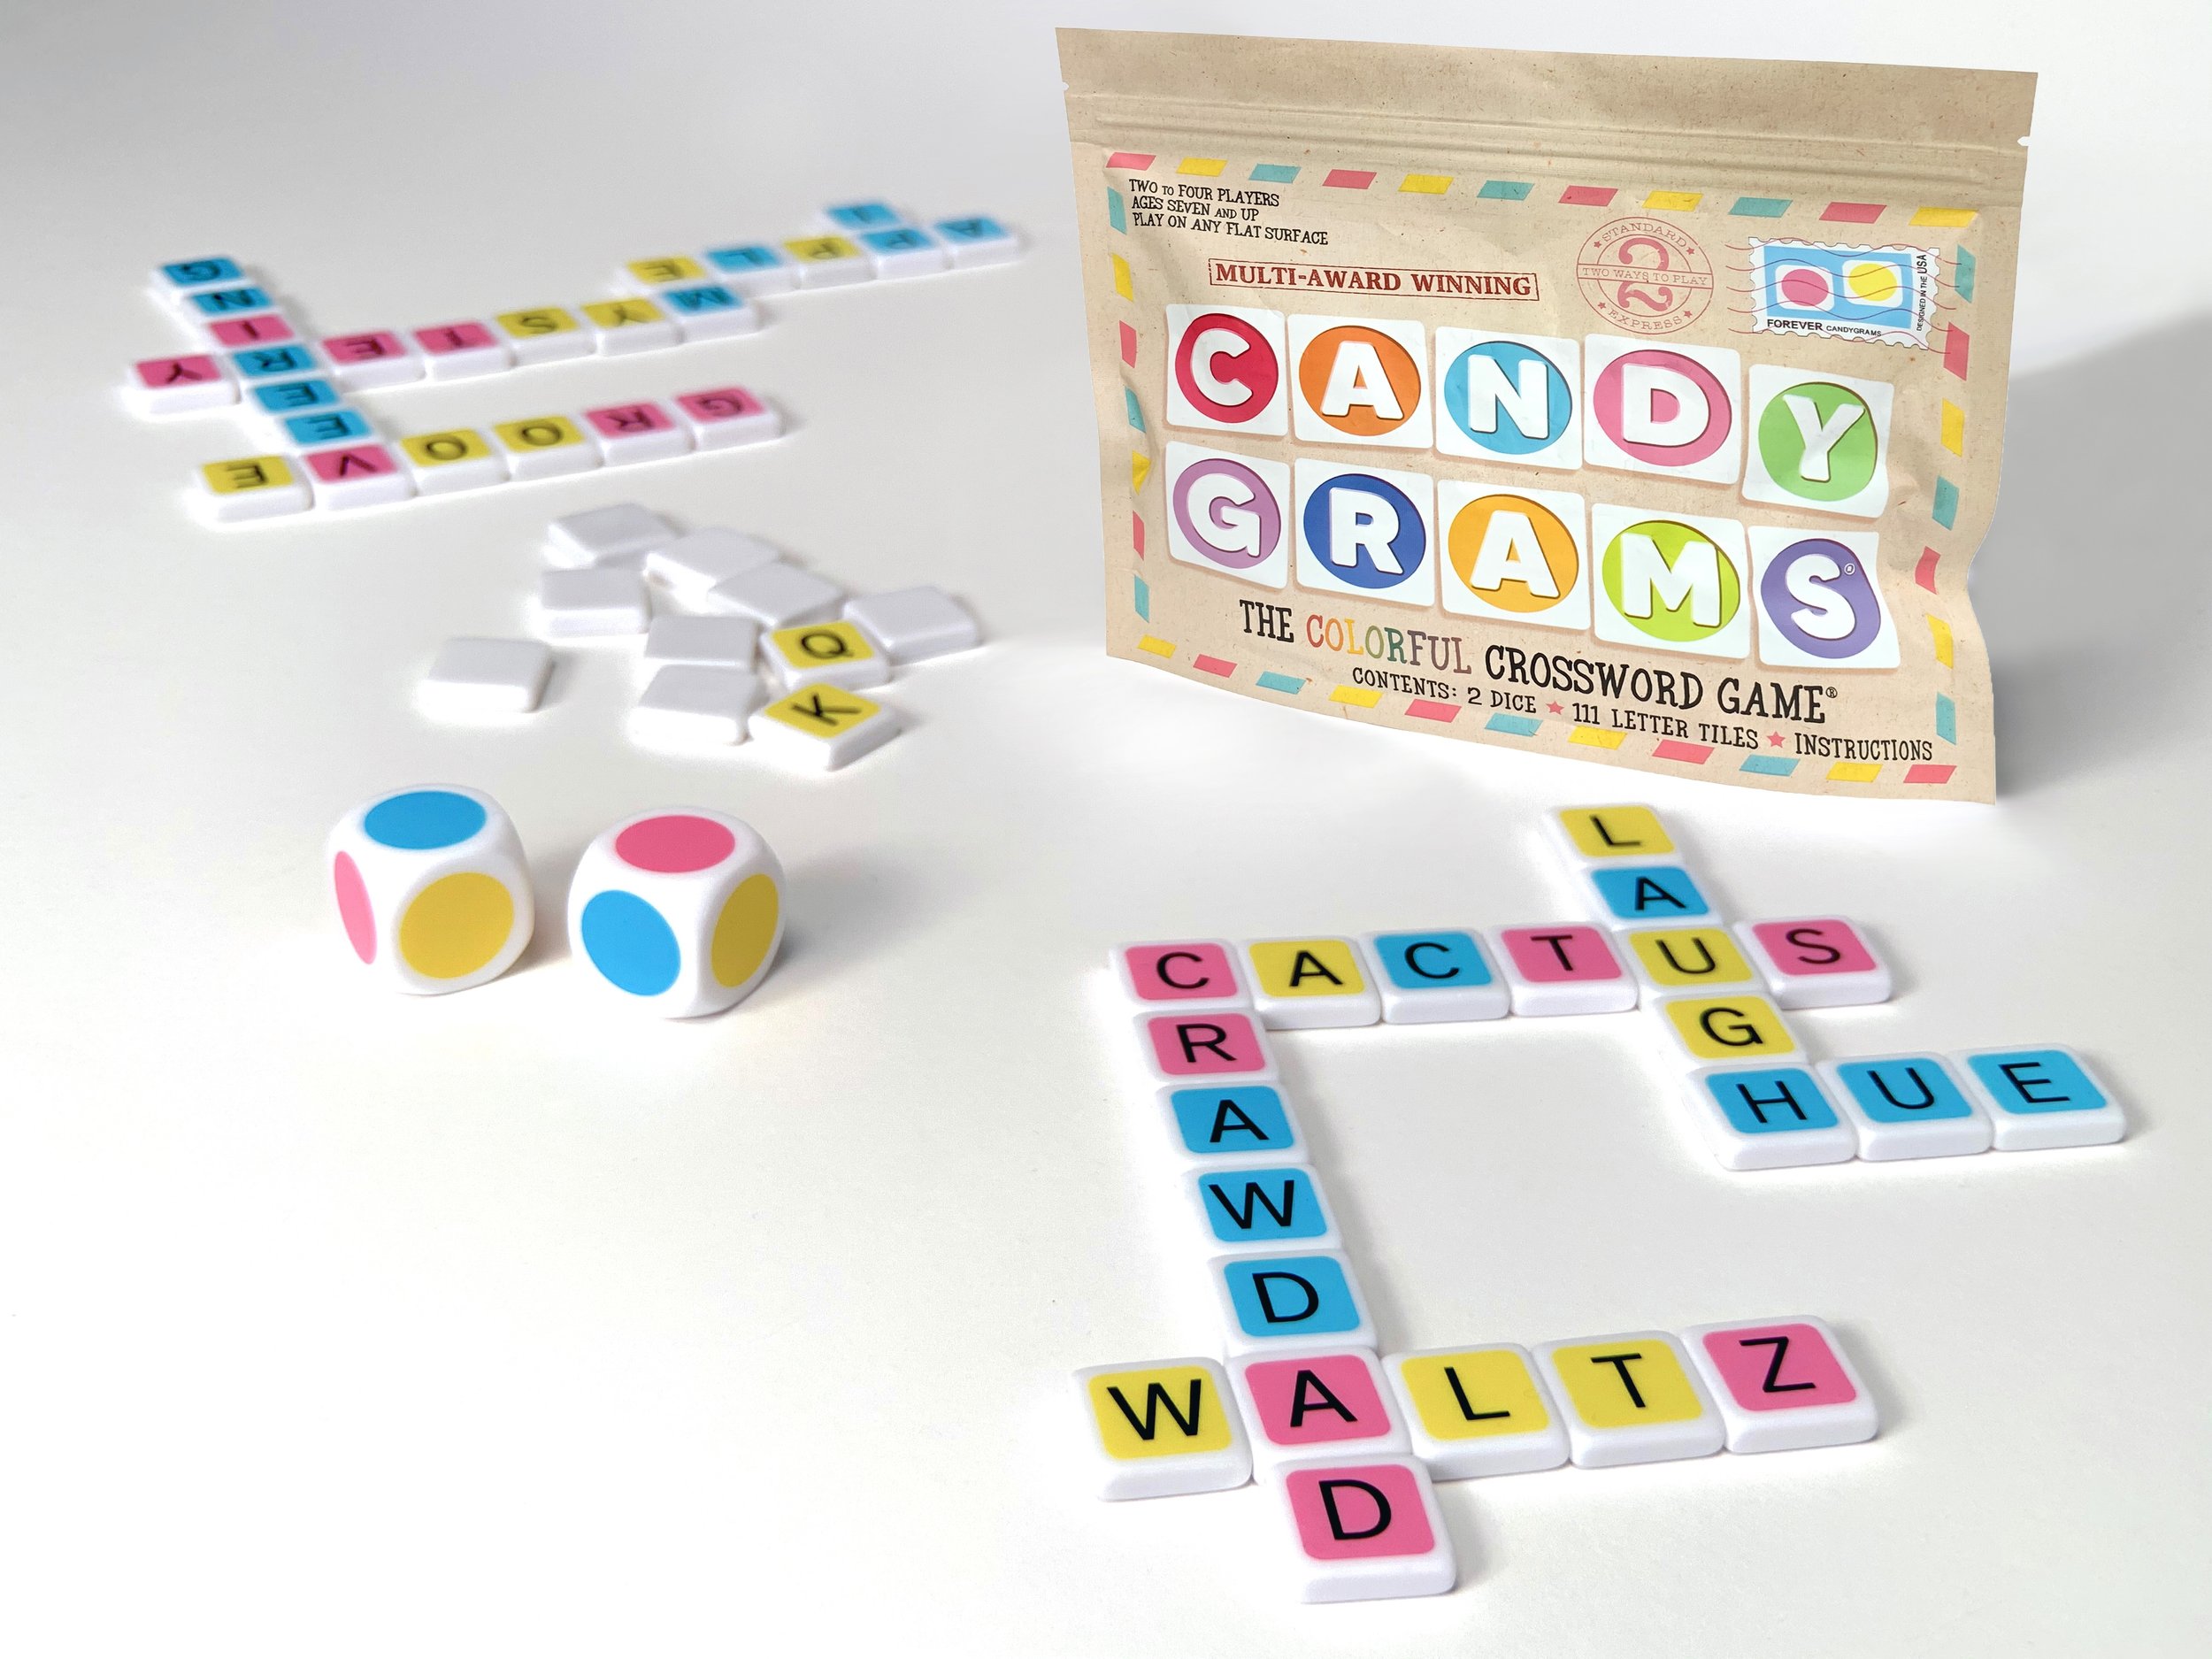 Candygrams-with-crosswords.jpg